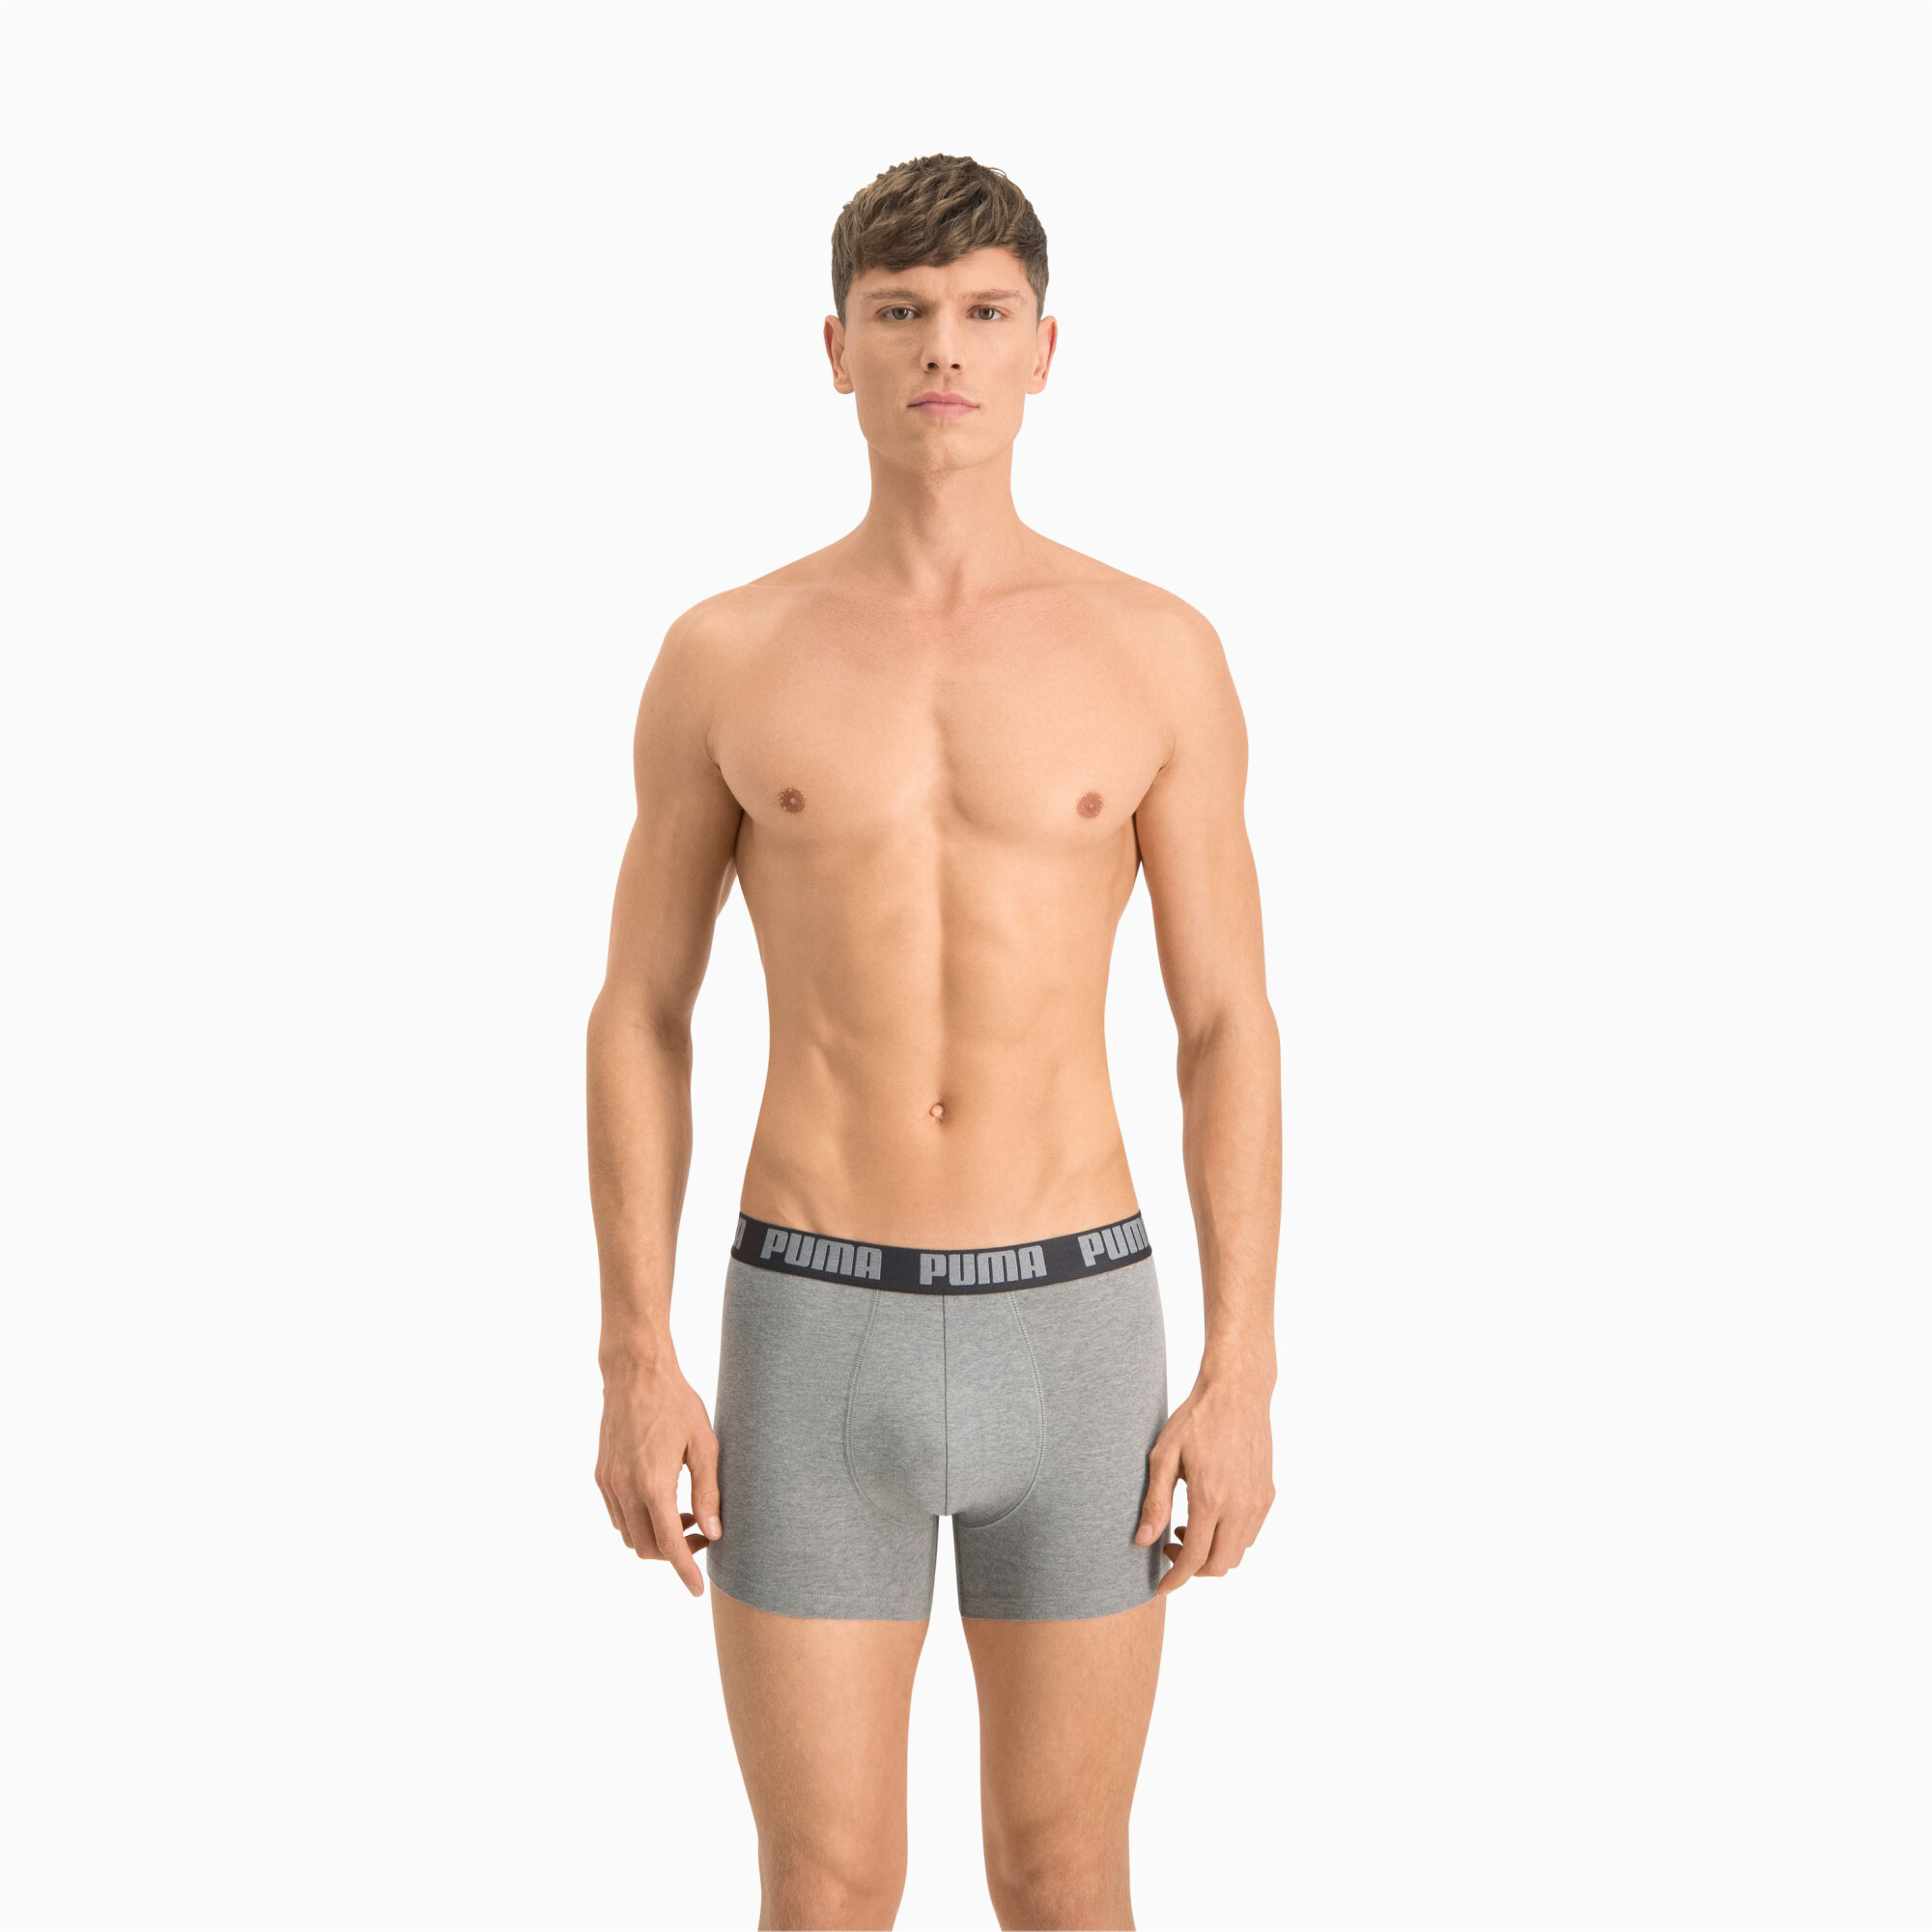 Men's PUMA Basic Boxers 2 Pack In Gray, Size Medium